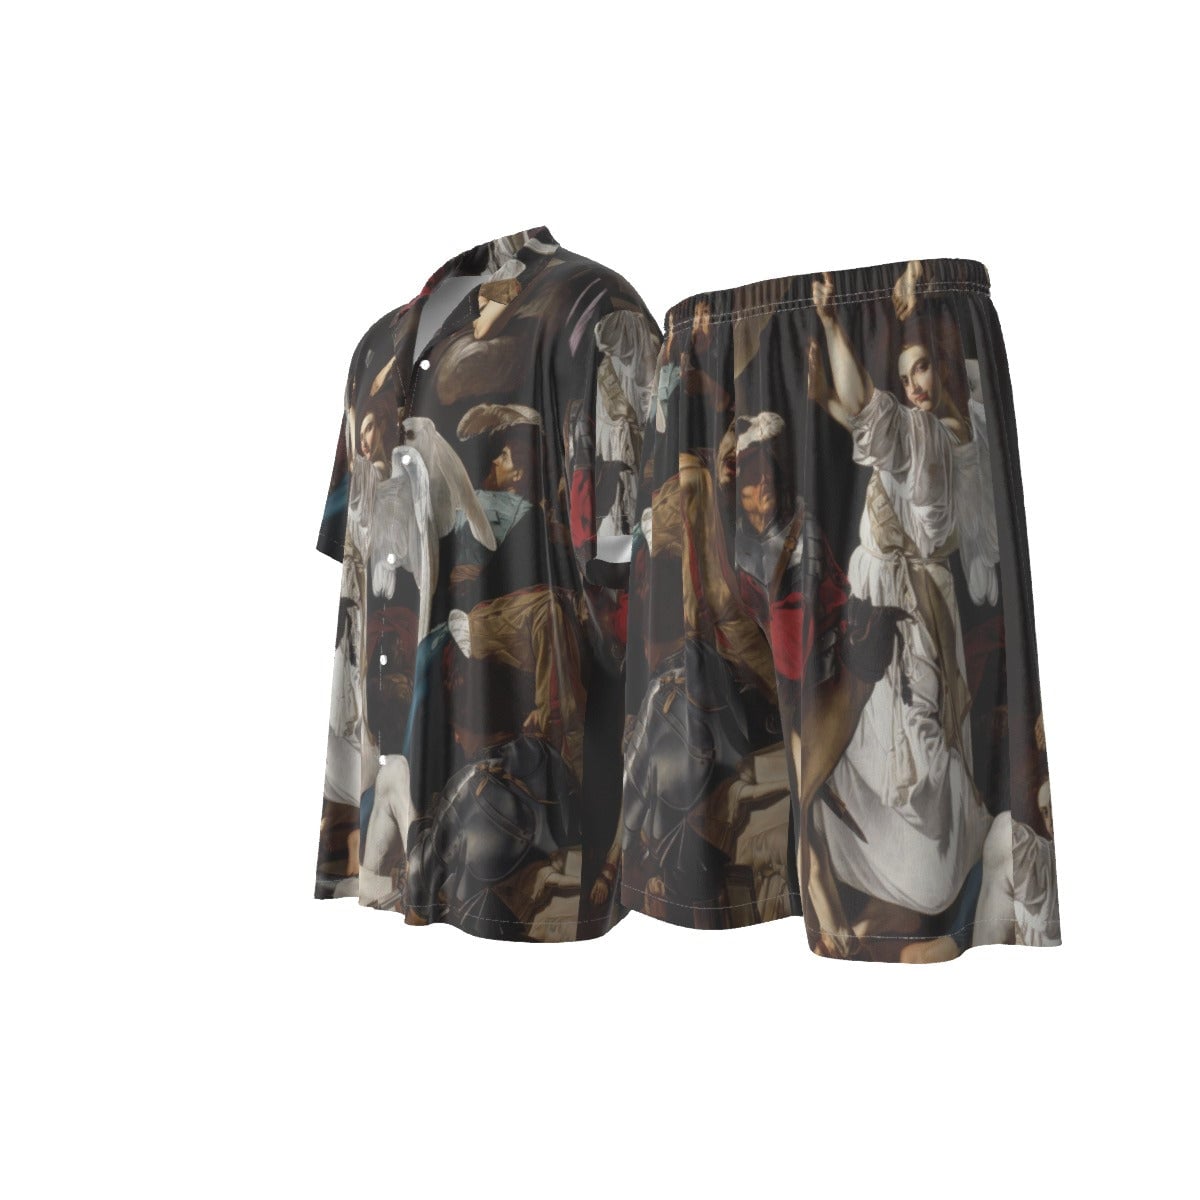 The Resurrection Cecco del Caravaggio Art Silk Shirt Suit Set